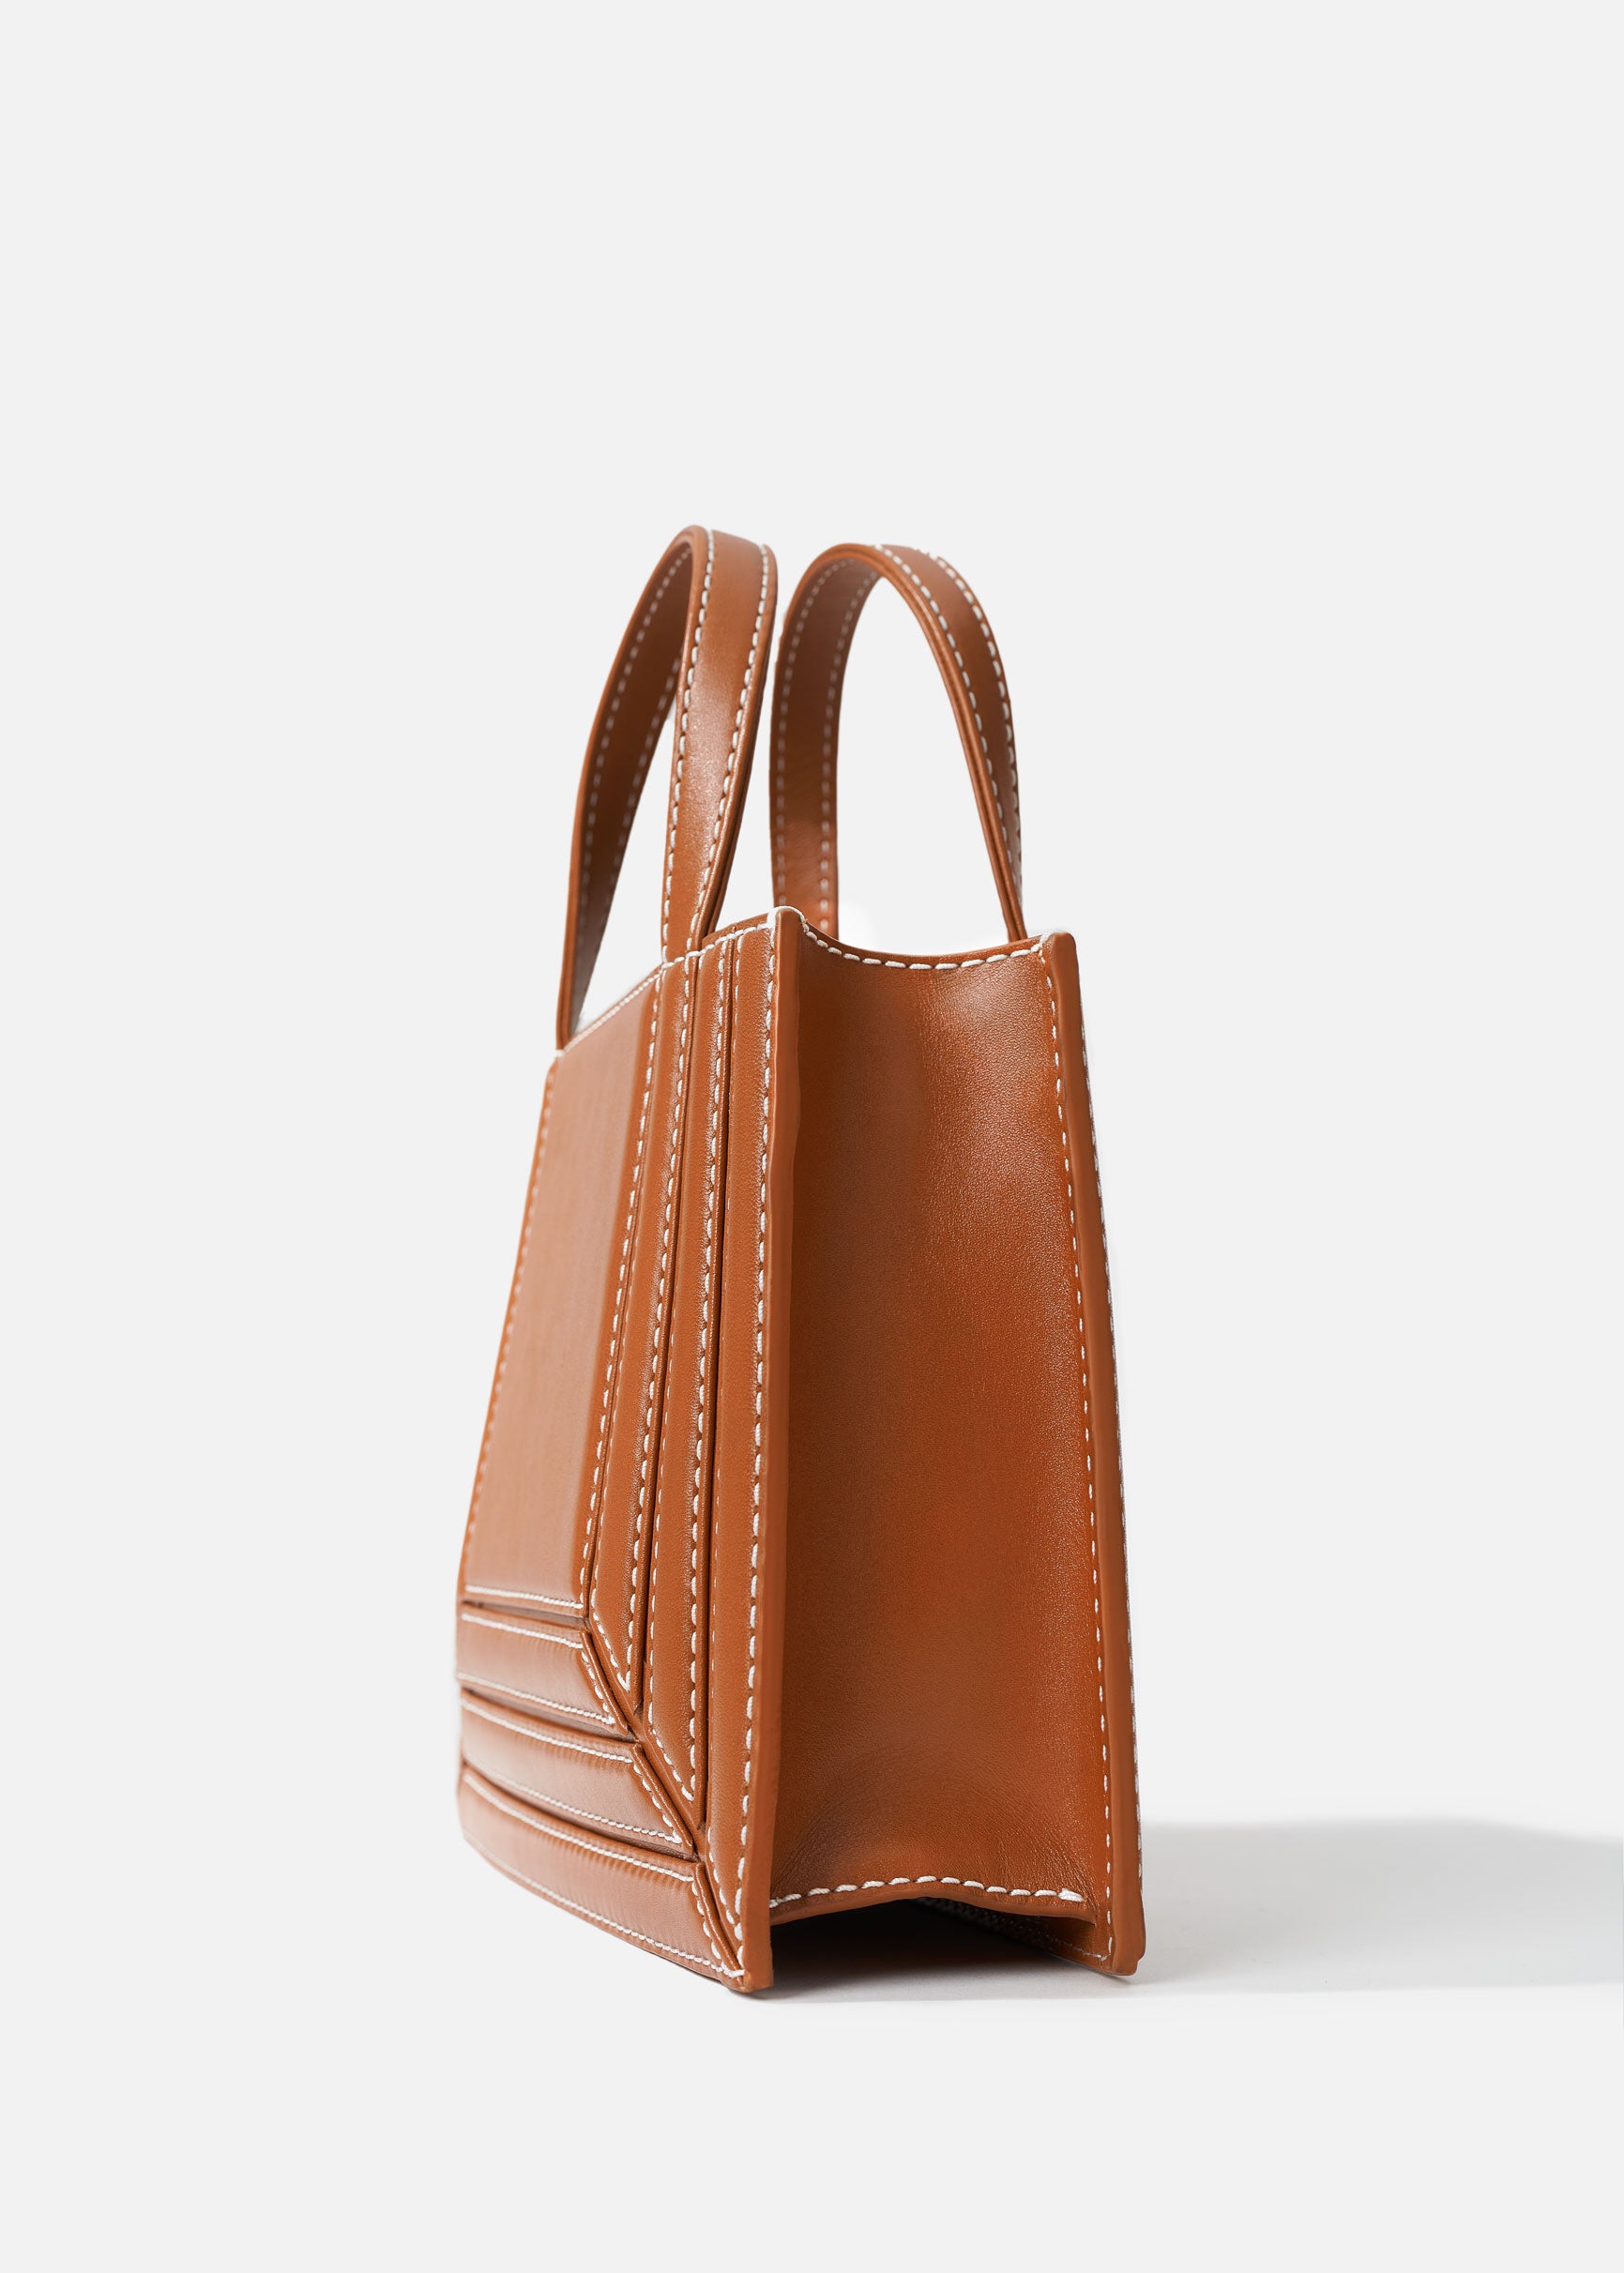 Palladian mini laramie leather double handle bag in cognac